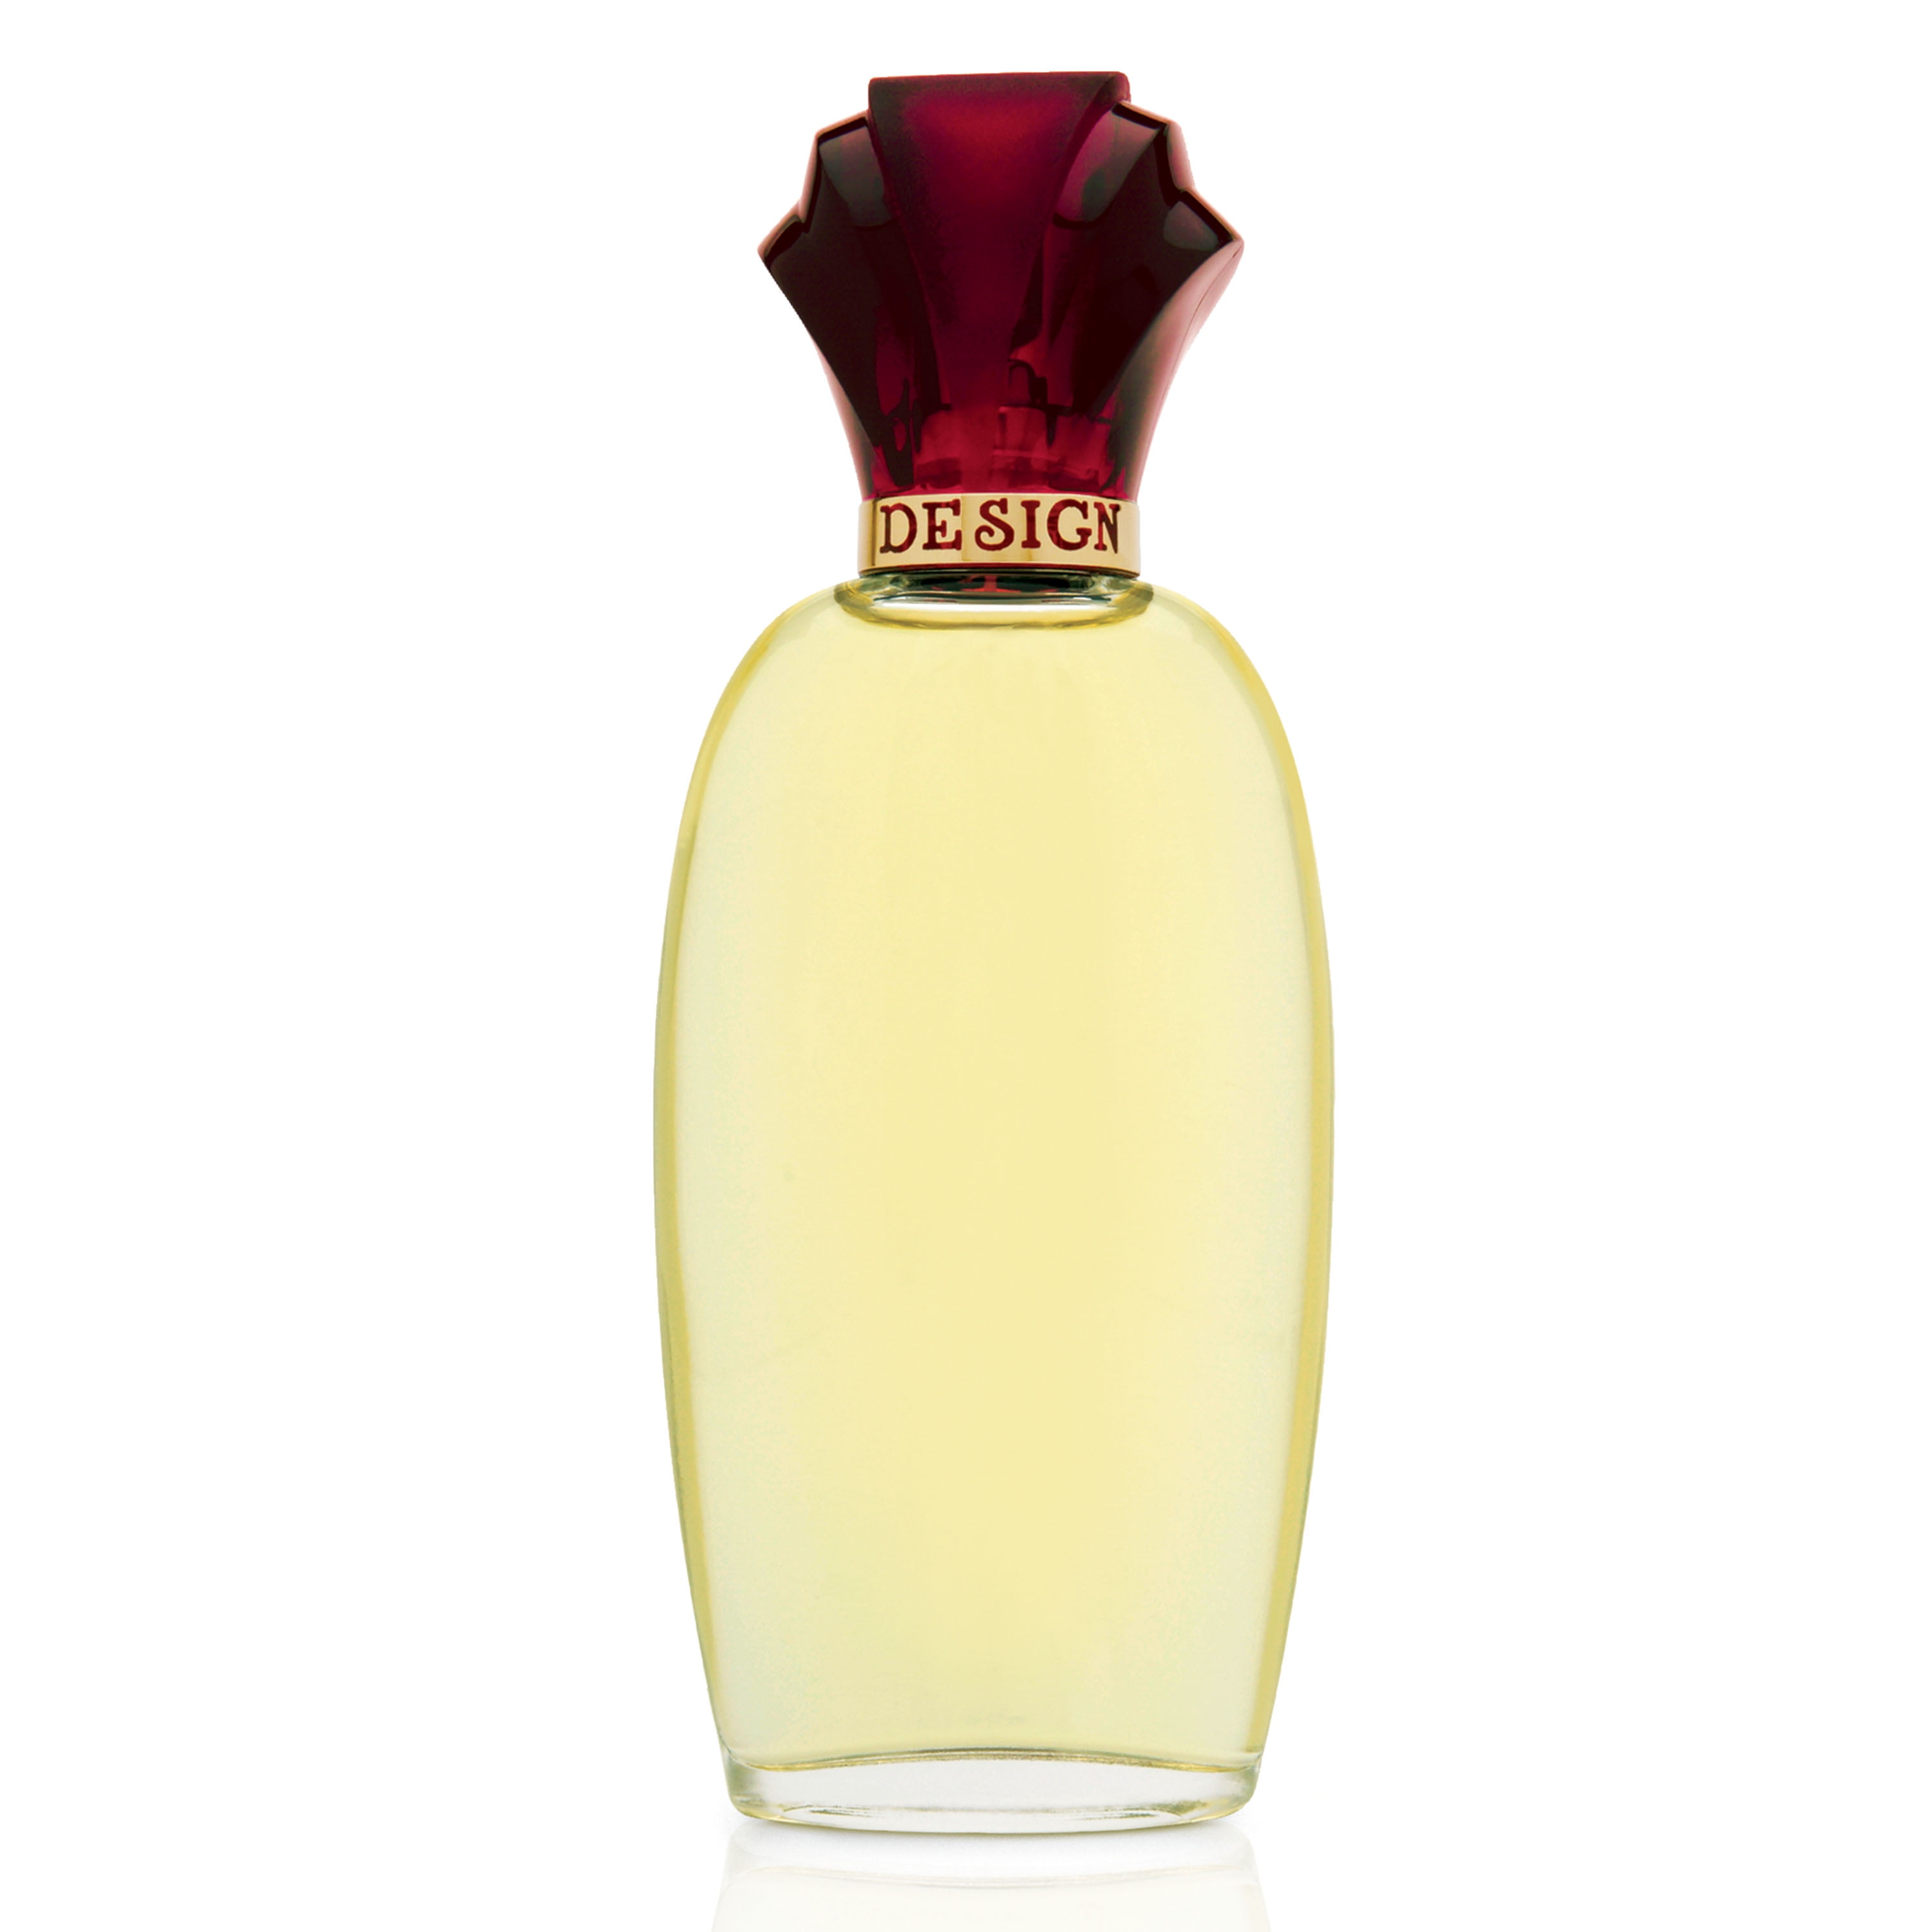 Paul Sebastian Design Eau De Parfum Spray, Perfume For Women, 1.7 Fl Oz